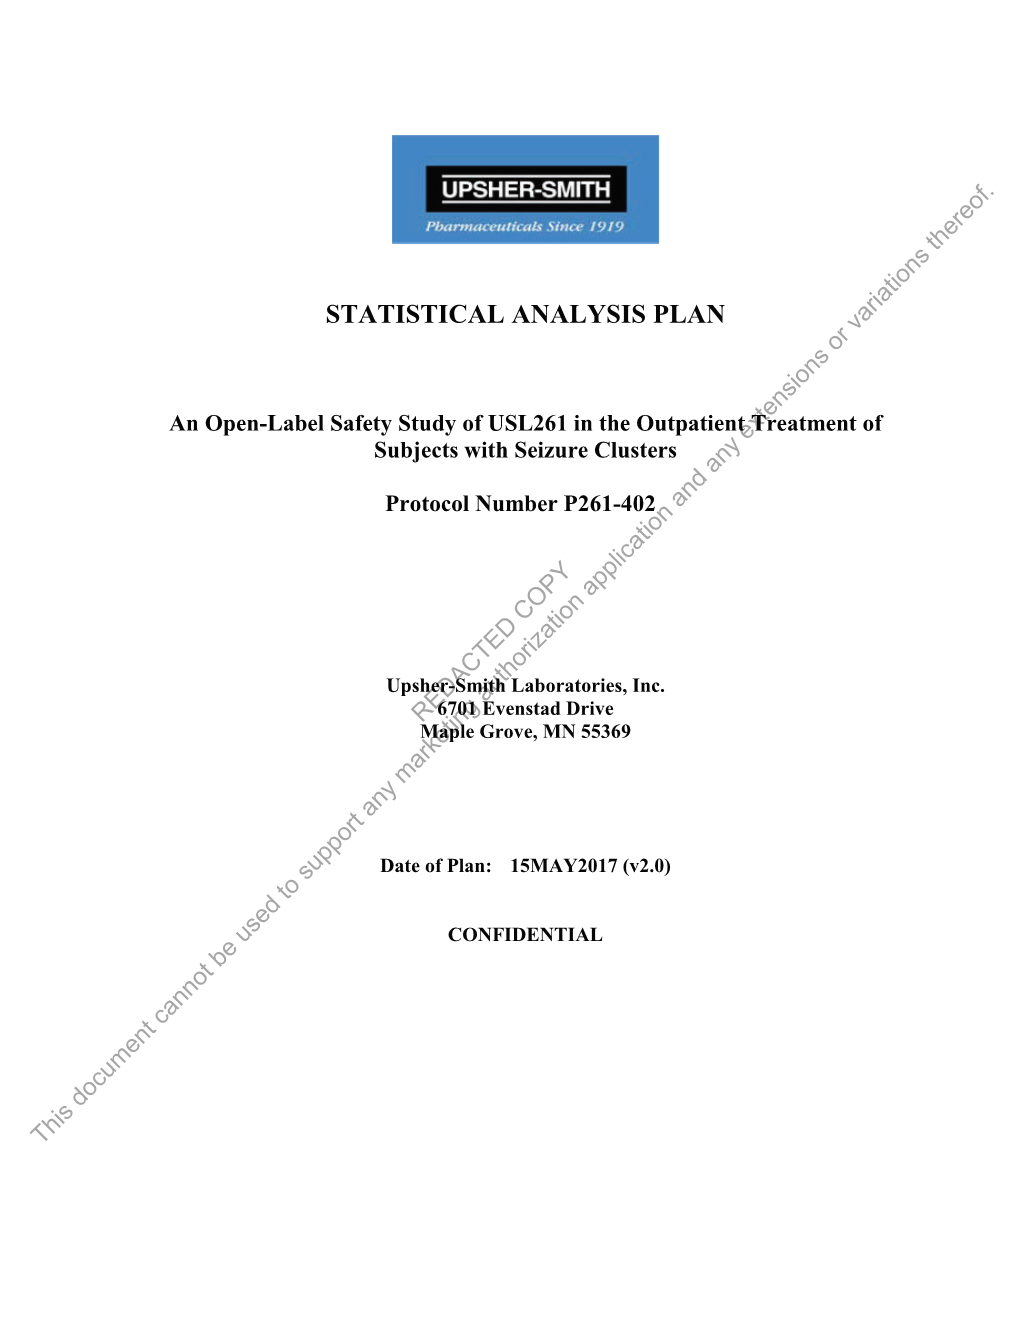 Statistical Analysis Plan for Protocol No.: P261-402